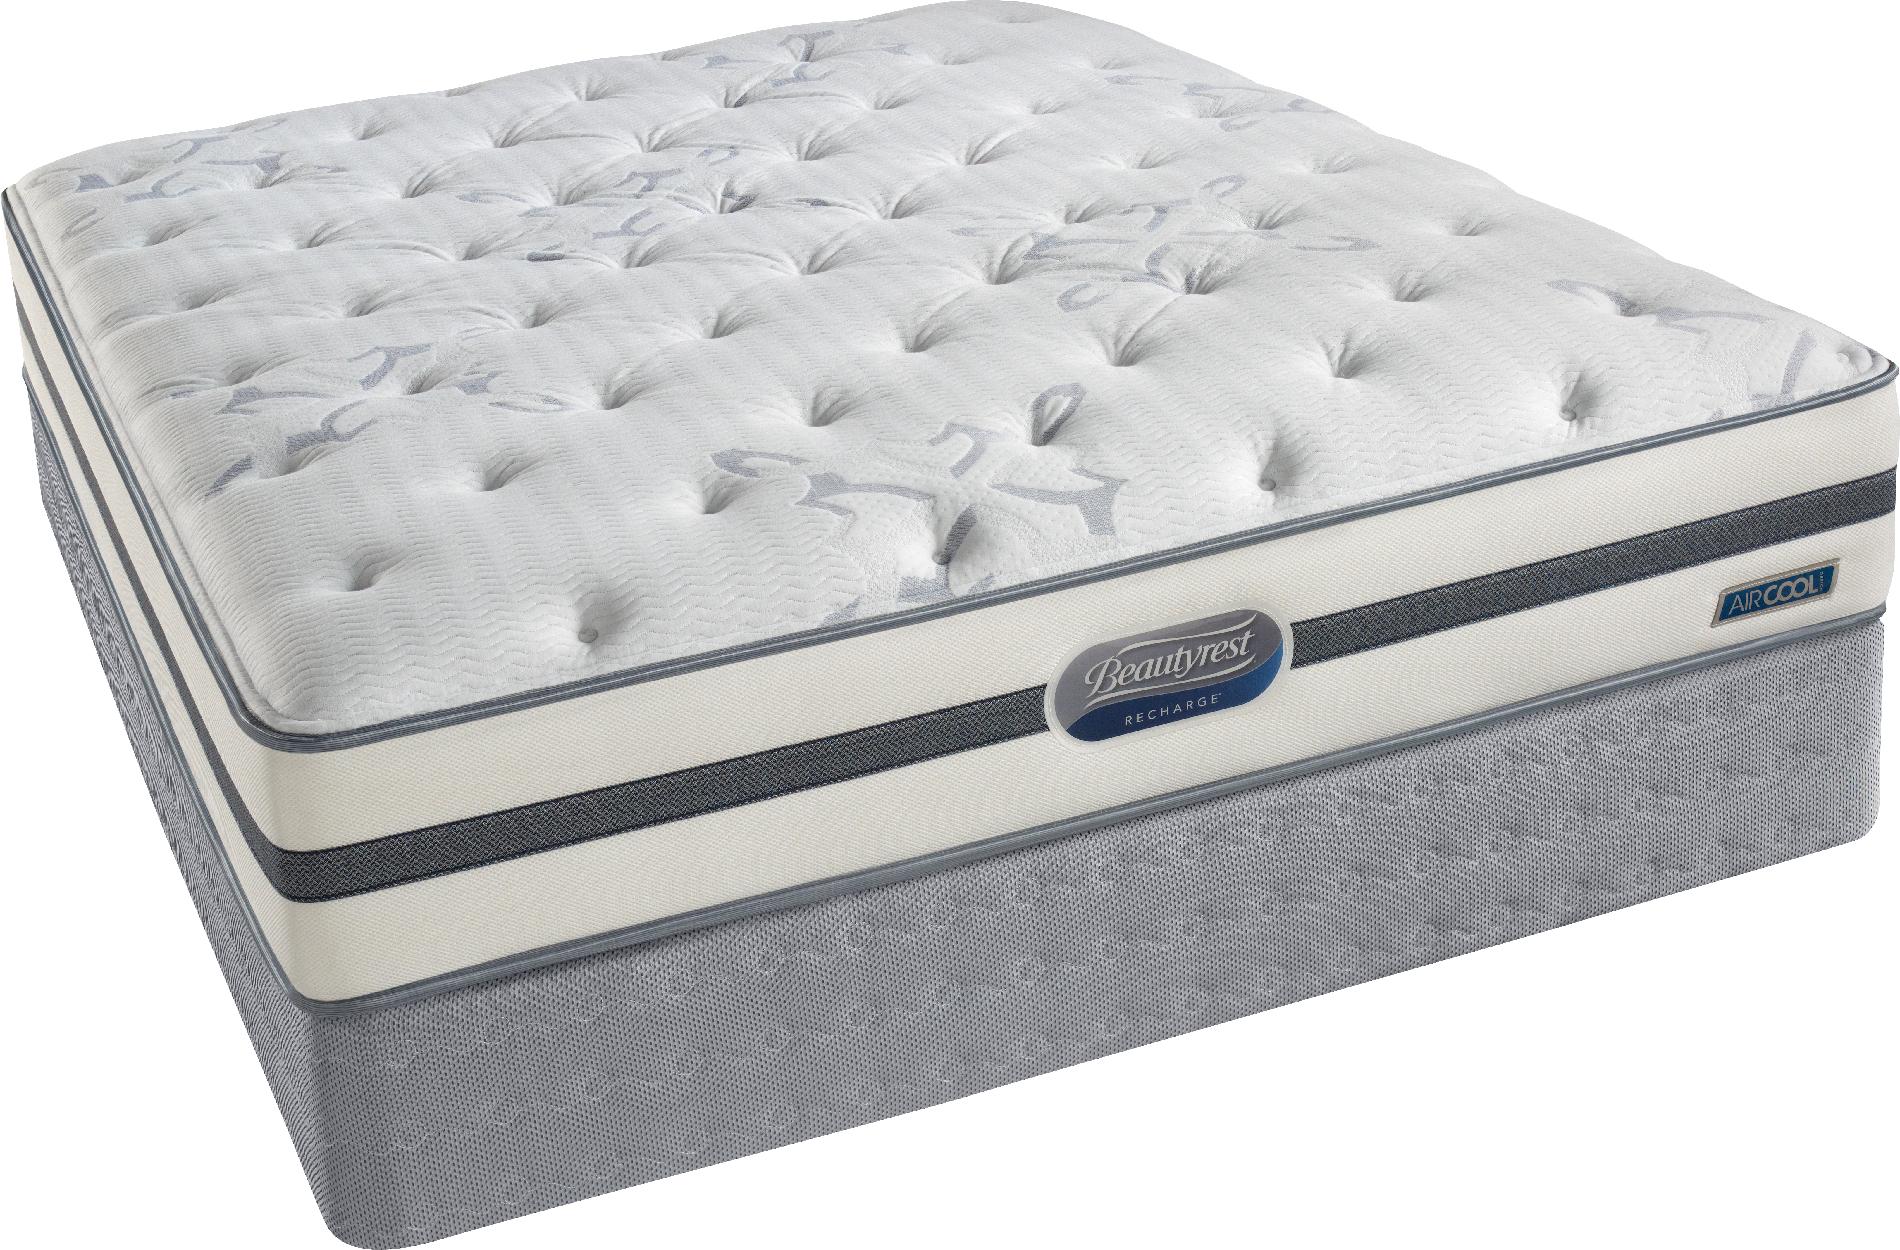 sears mattress cover waterproof